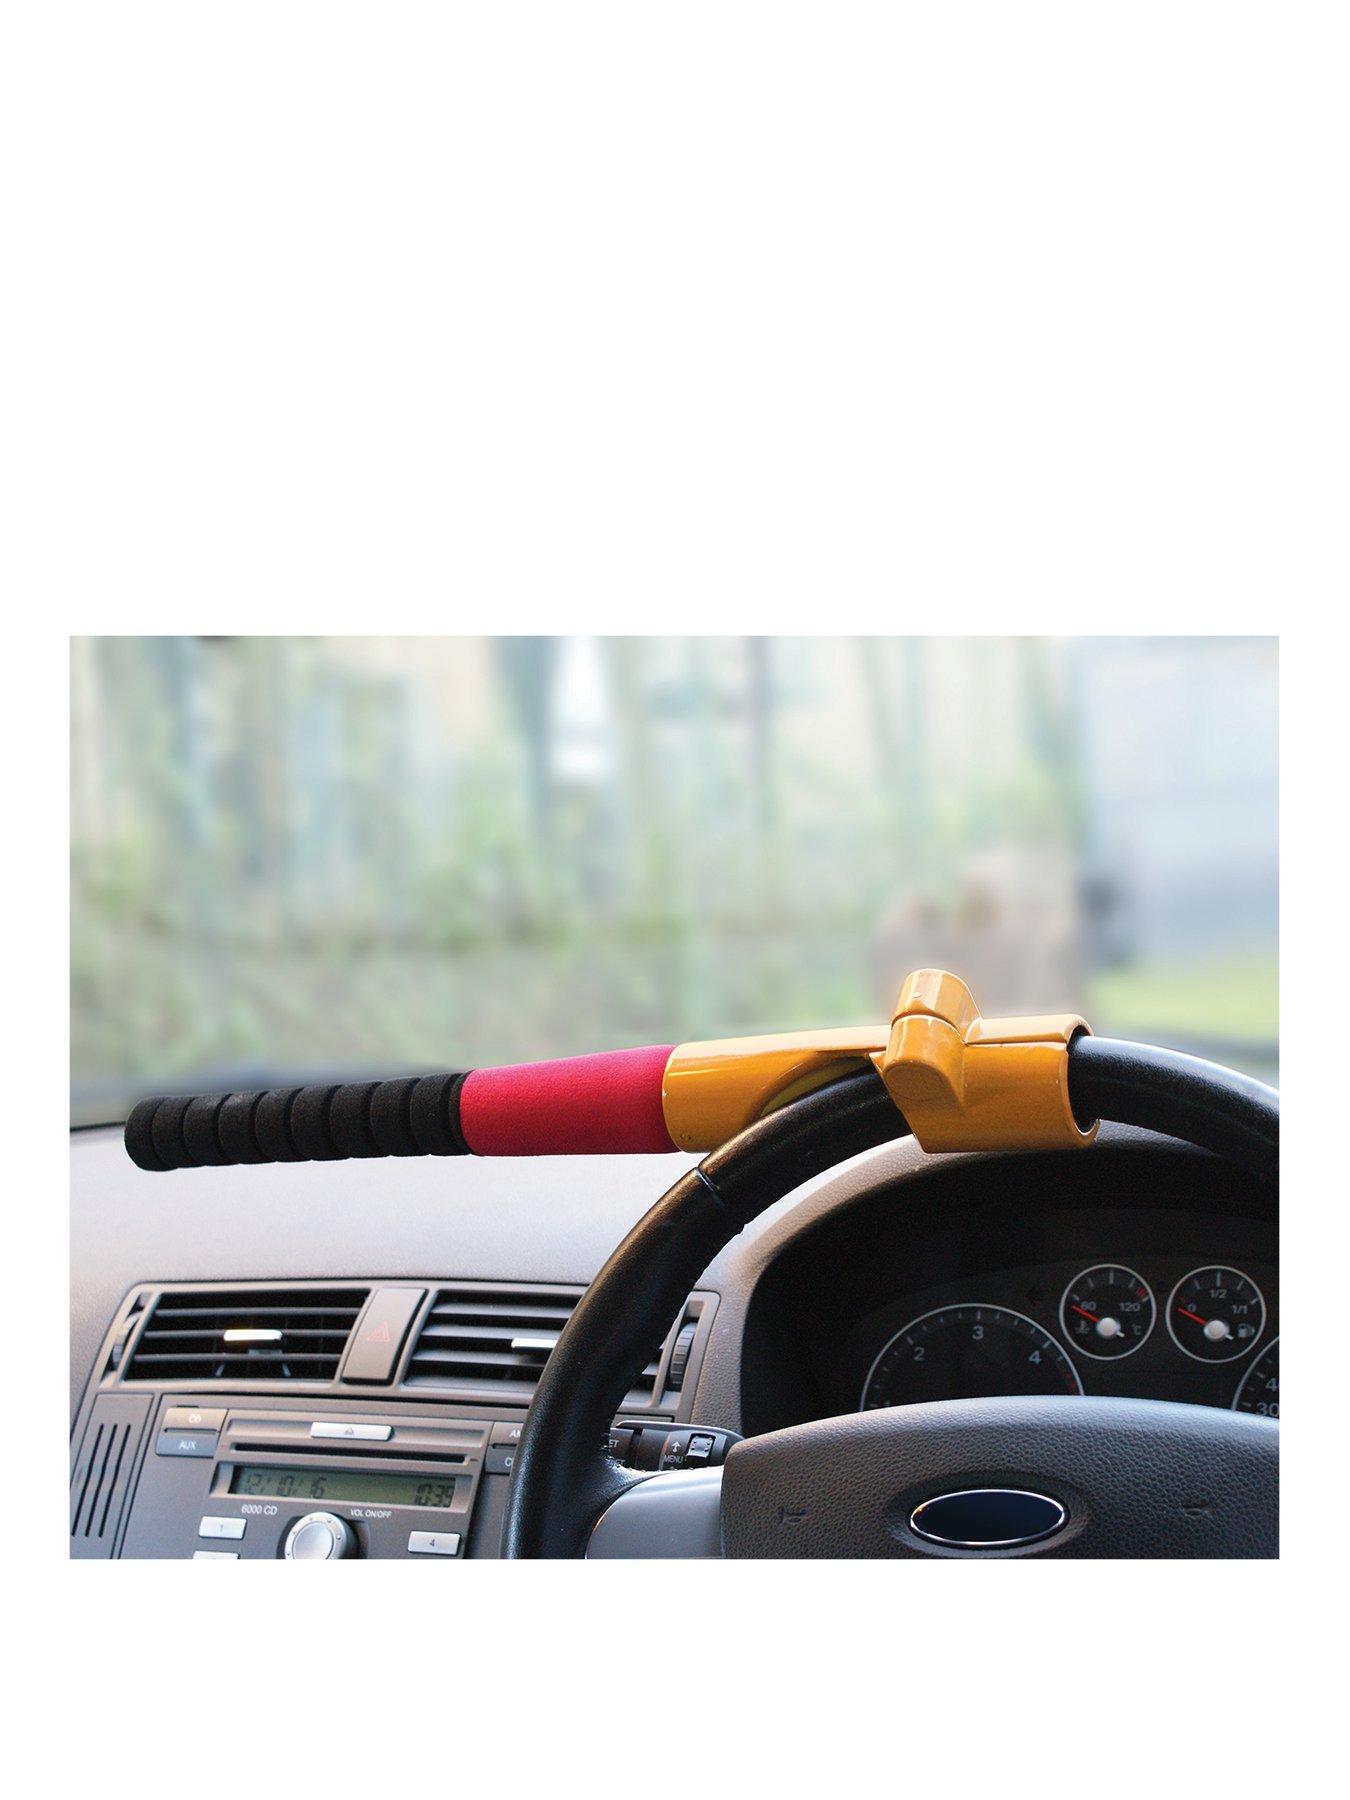 Anti-Theft Security Steering Wheel Lock with Keys,Thickened Baseball Bat M 